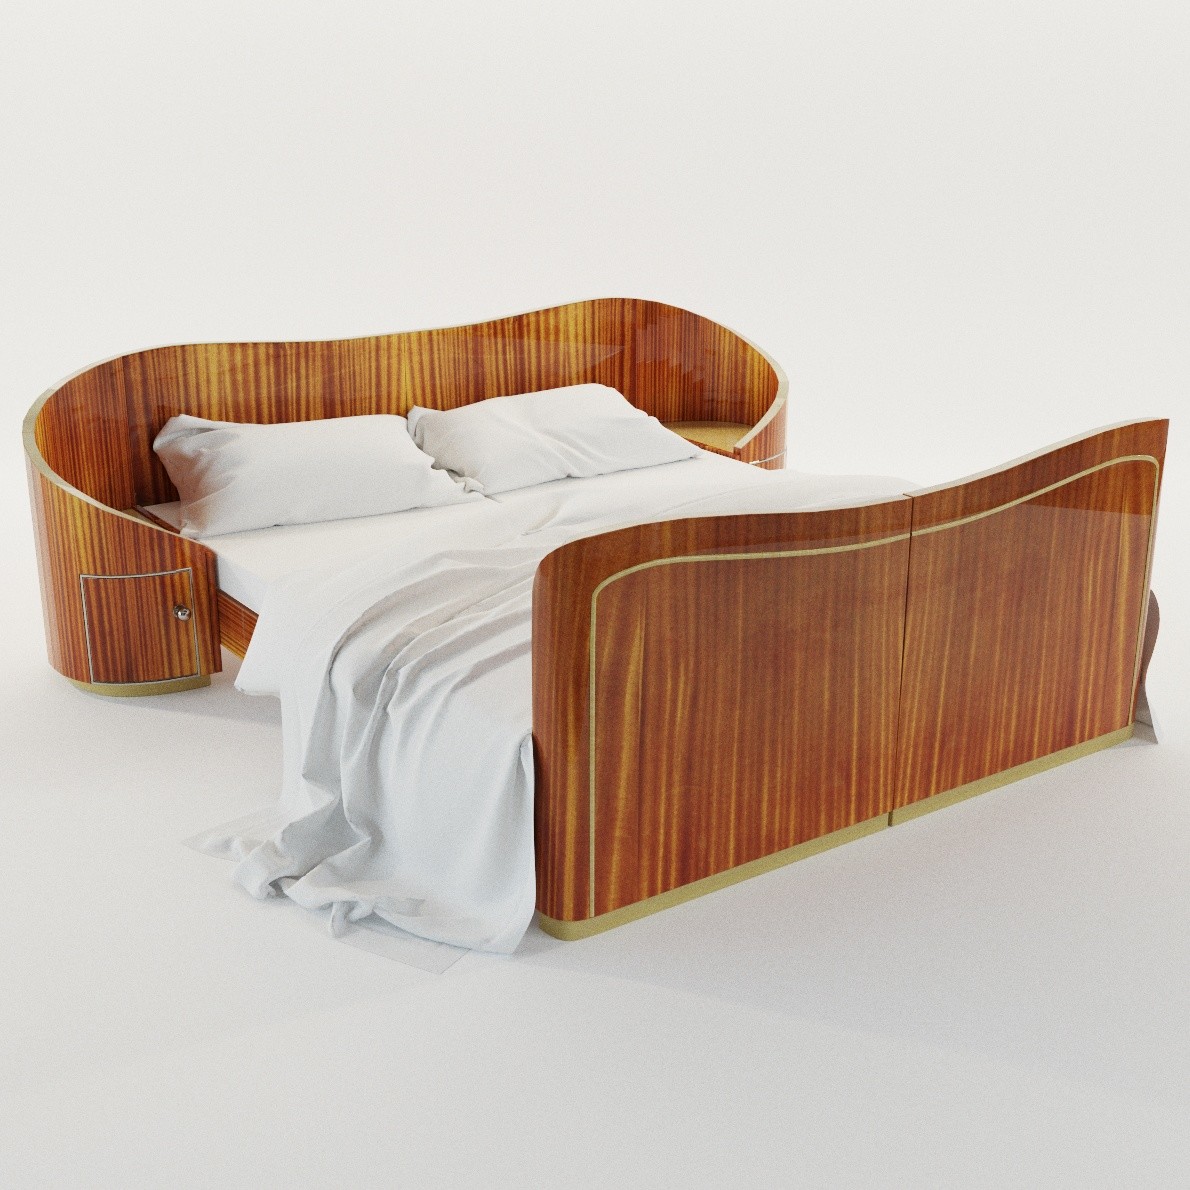 Art Deco Bed With Bedside Tables 3d, Art Nouveau Bed Frame